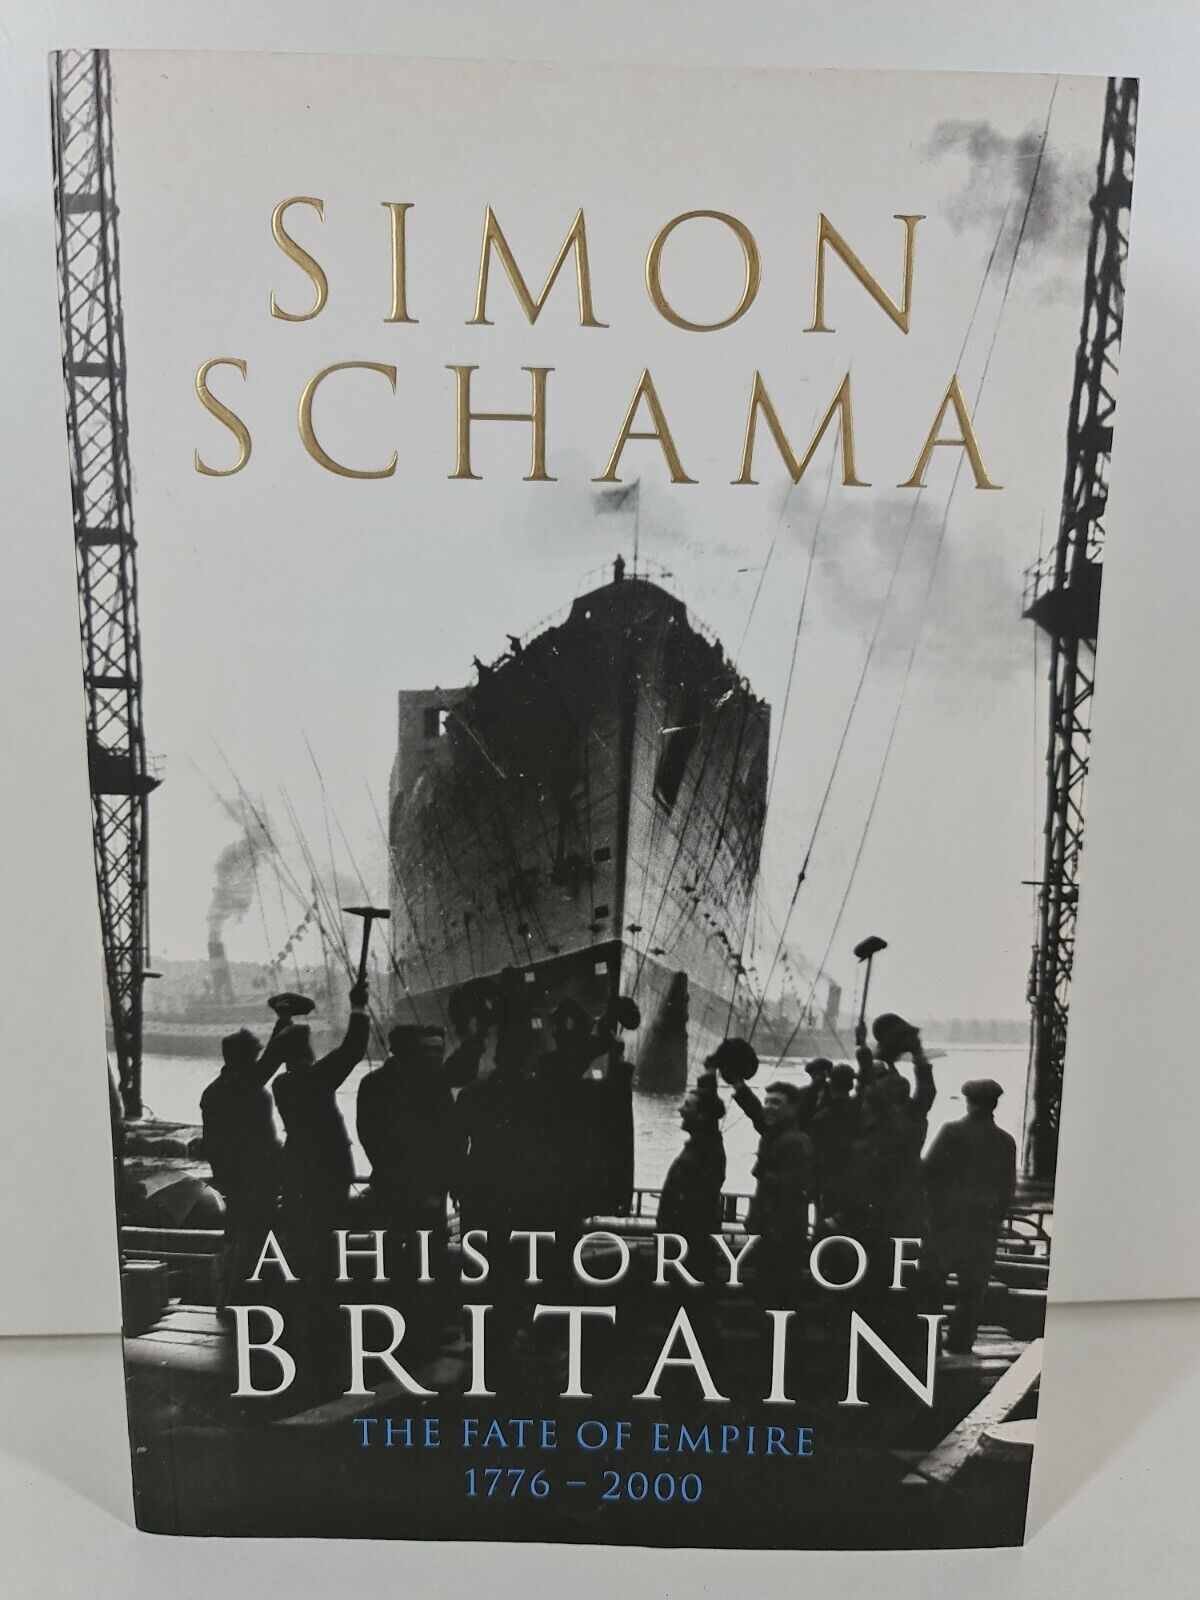 A History of Britain: Fate of Empire 1776-2000 by Simon Schama